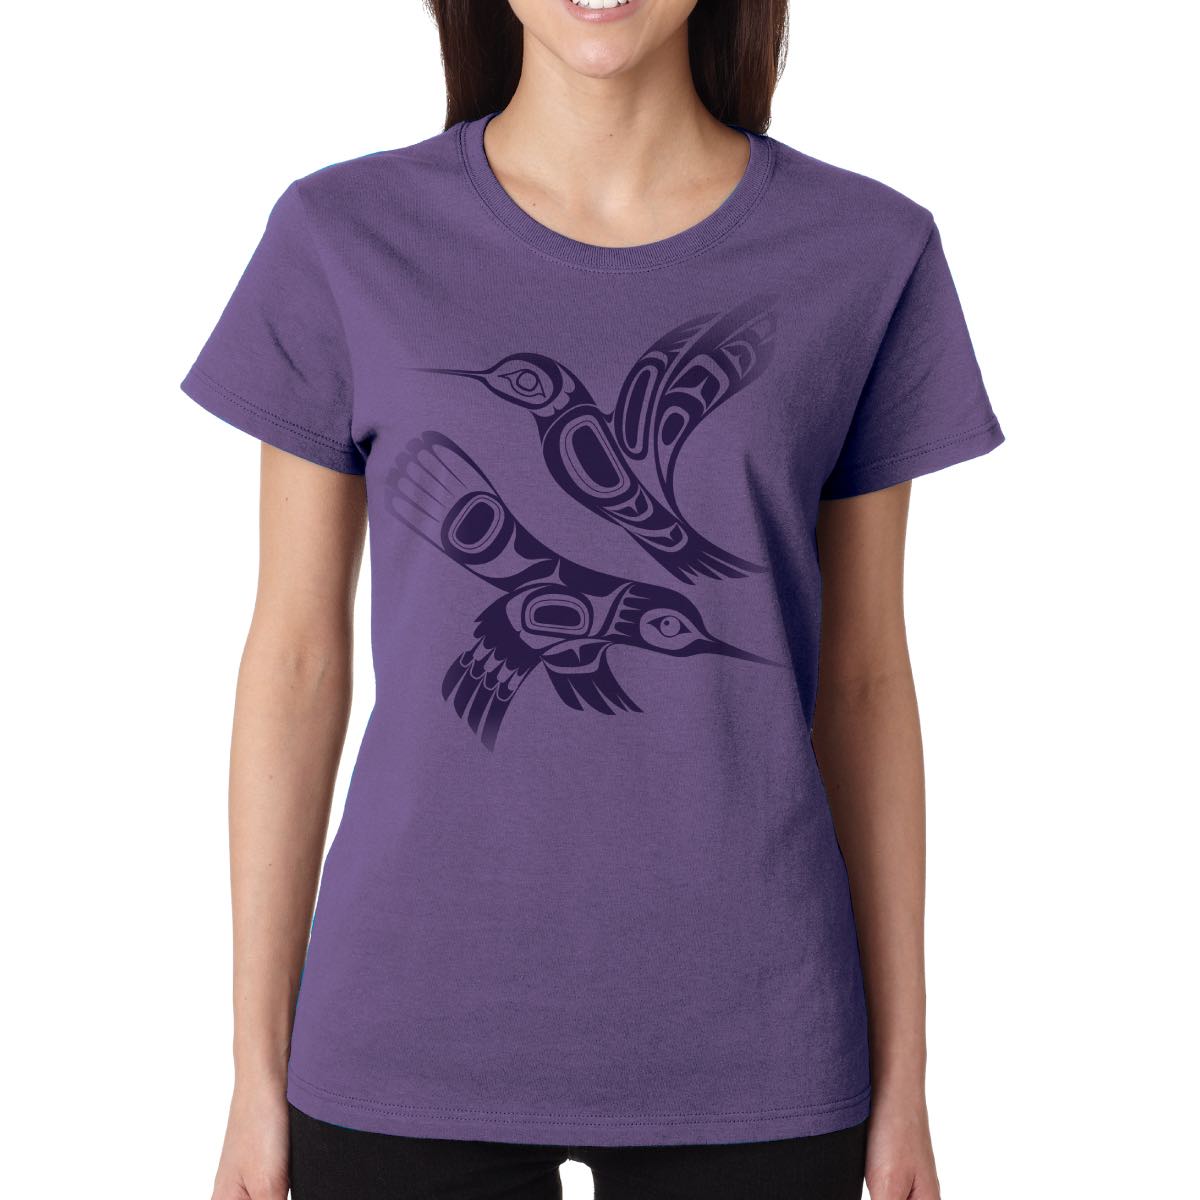 T Shirt Paul Windsor Infinite Joy - Purple / XXL - TPWIXXL - House of Himwitsa Native Art Gallery and Gifts